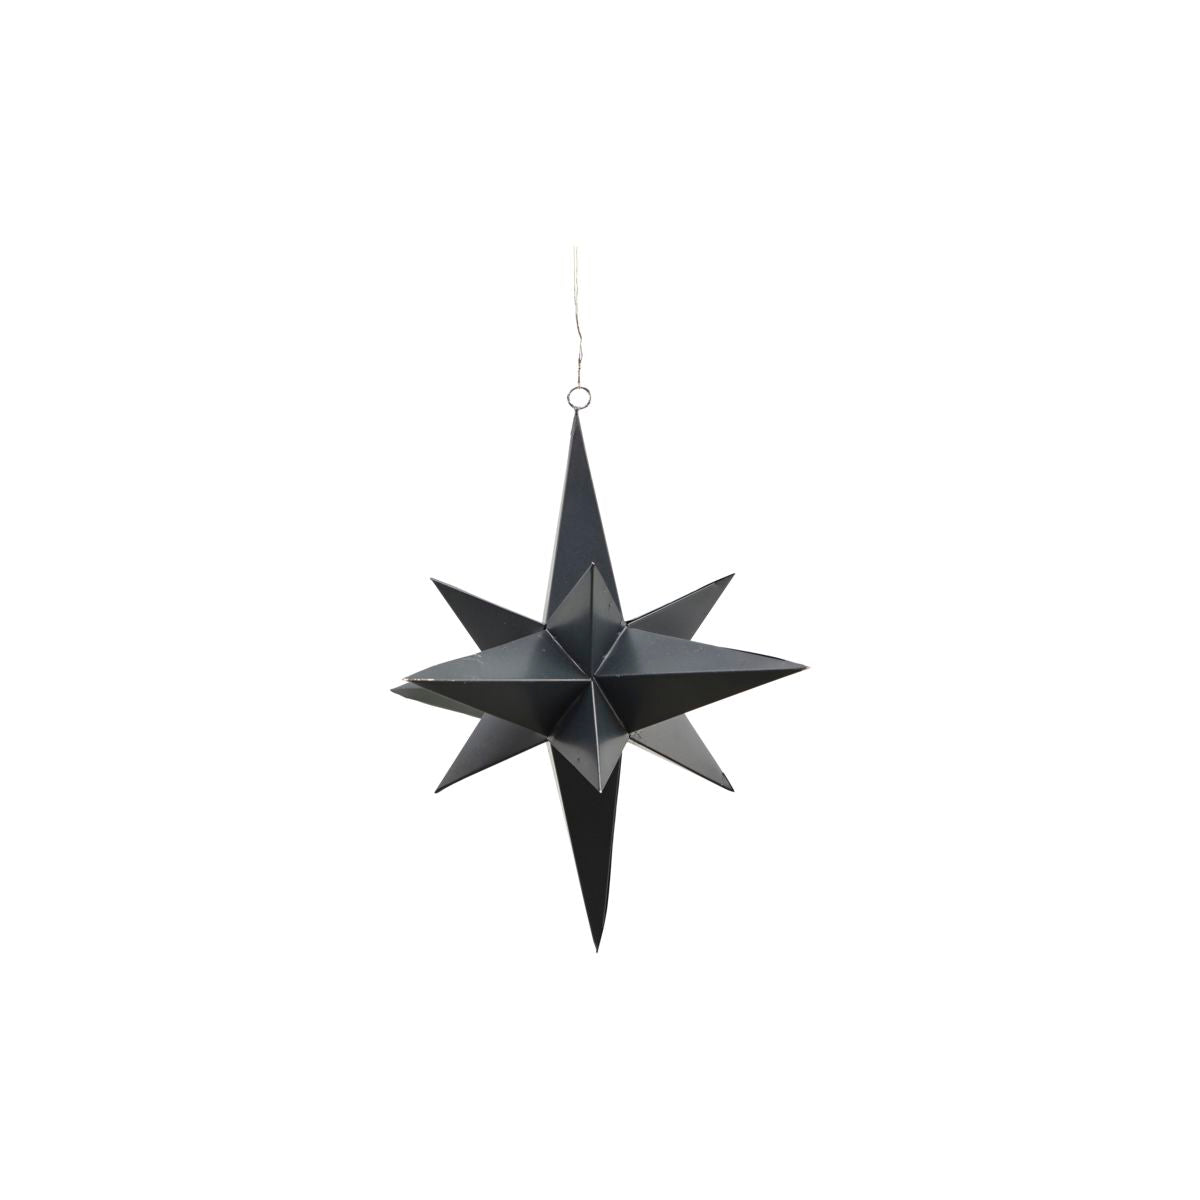 3 Dimensional Iron Christmas Star Ornament Media 1 of 3